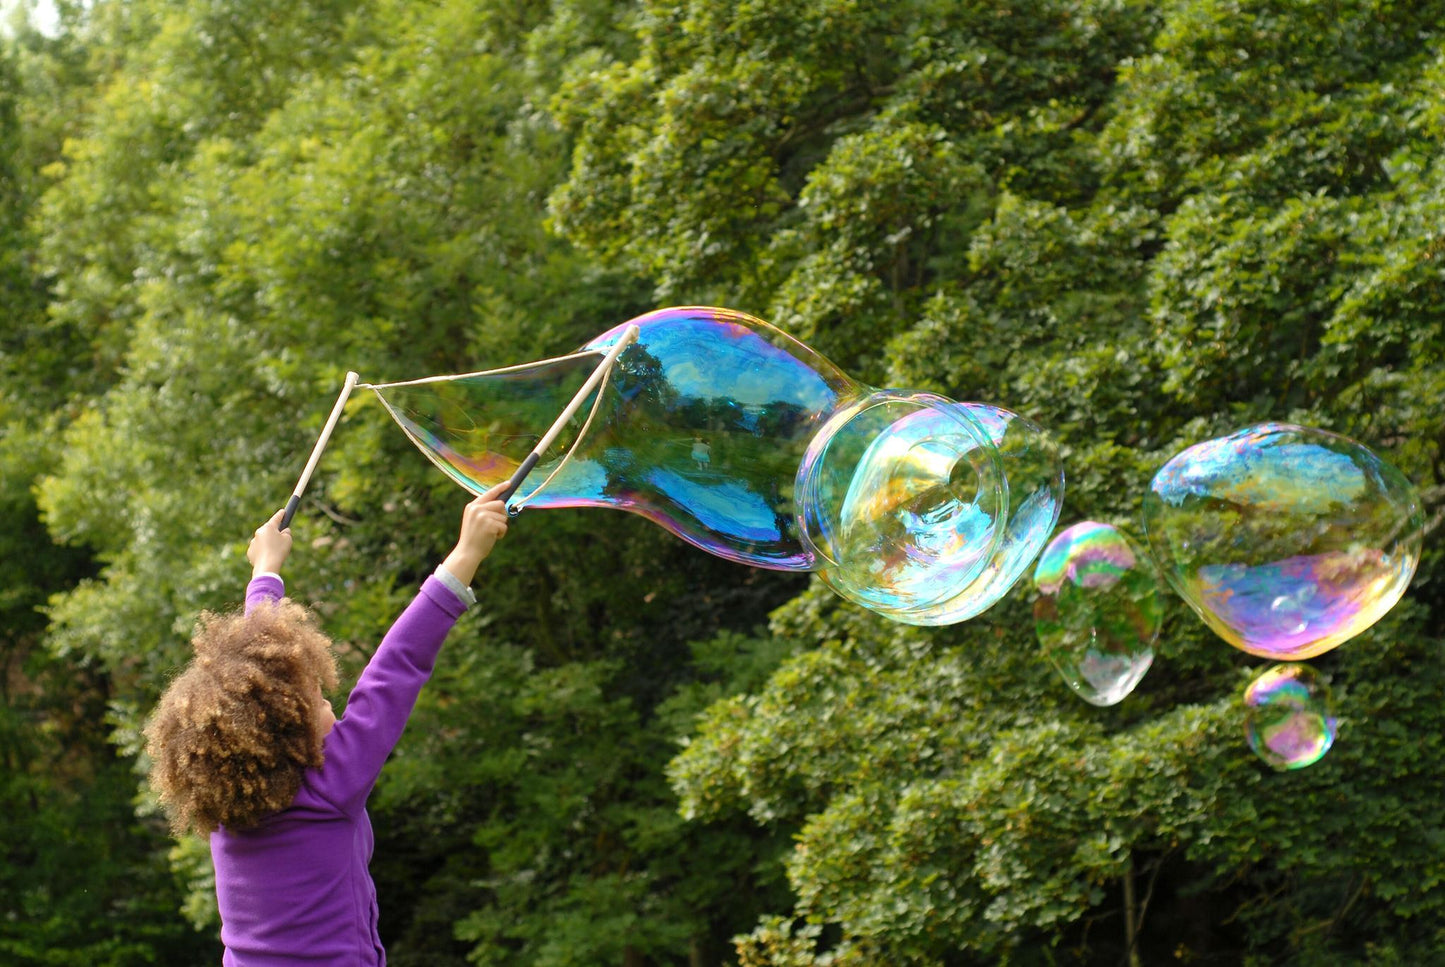 Dr. Zigs Wooden Kiddie Giant Bubble Wand